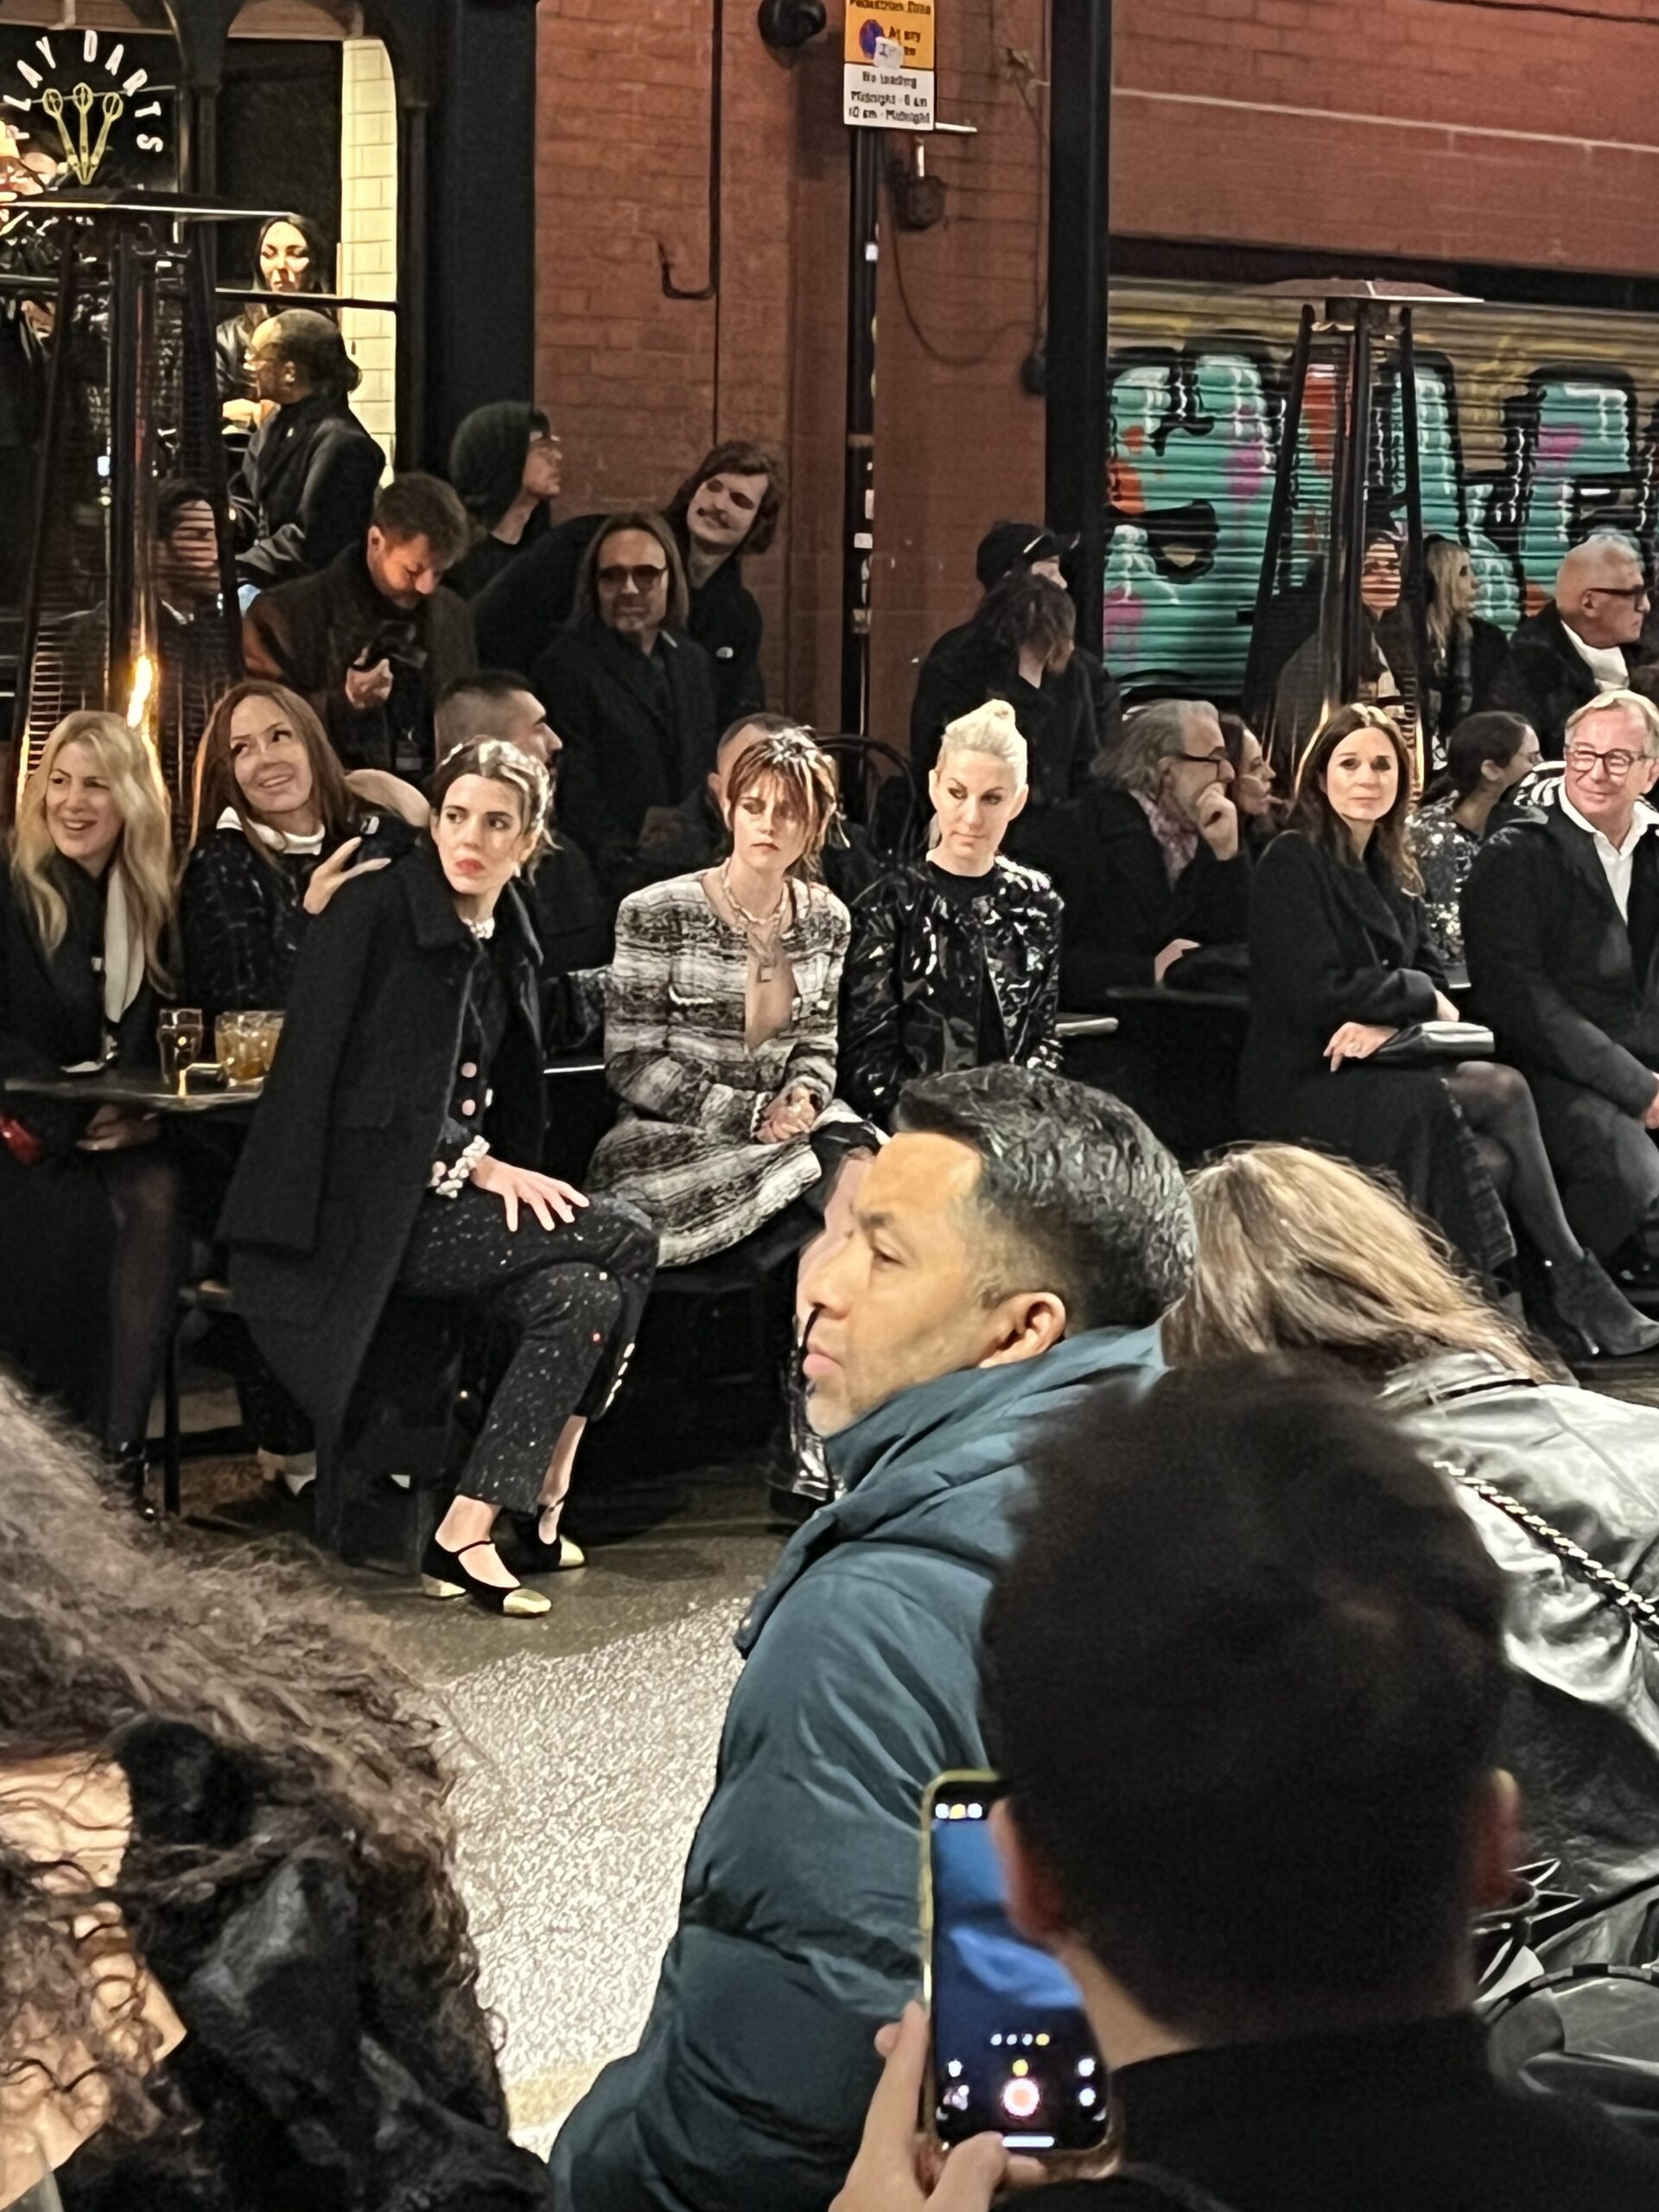 Kristen Stewart front row at Chanel's show in Manchester